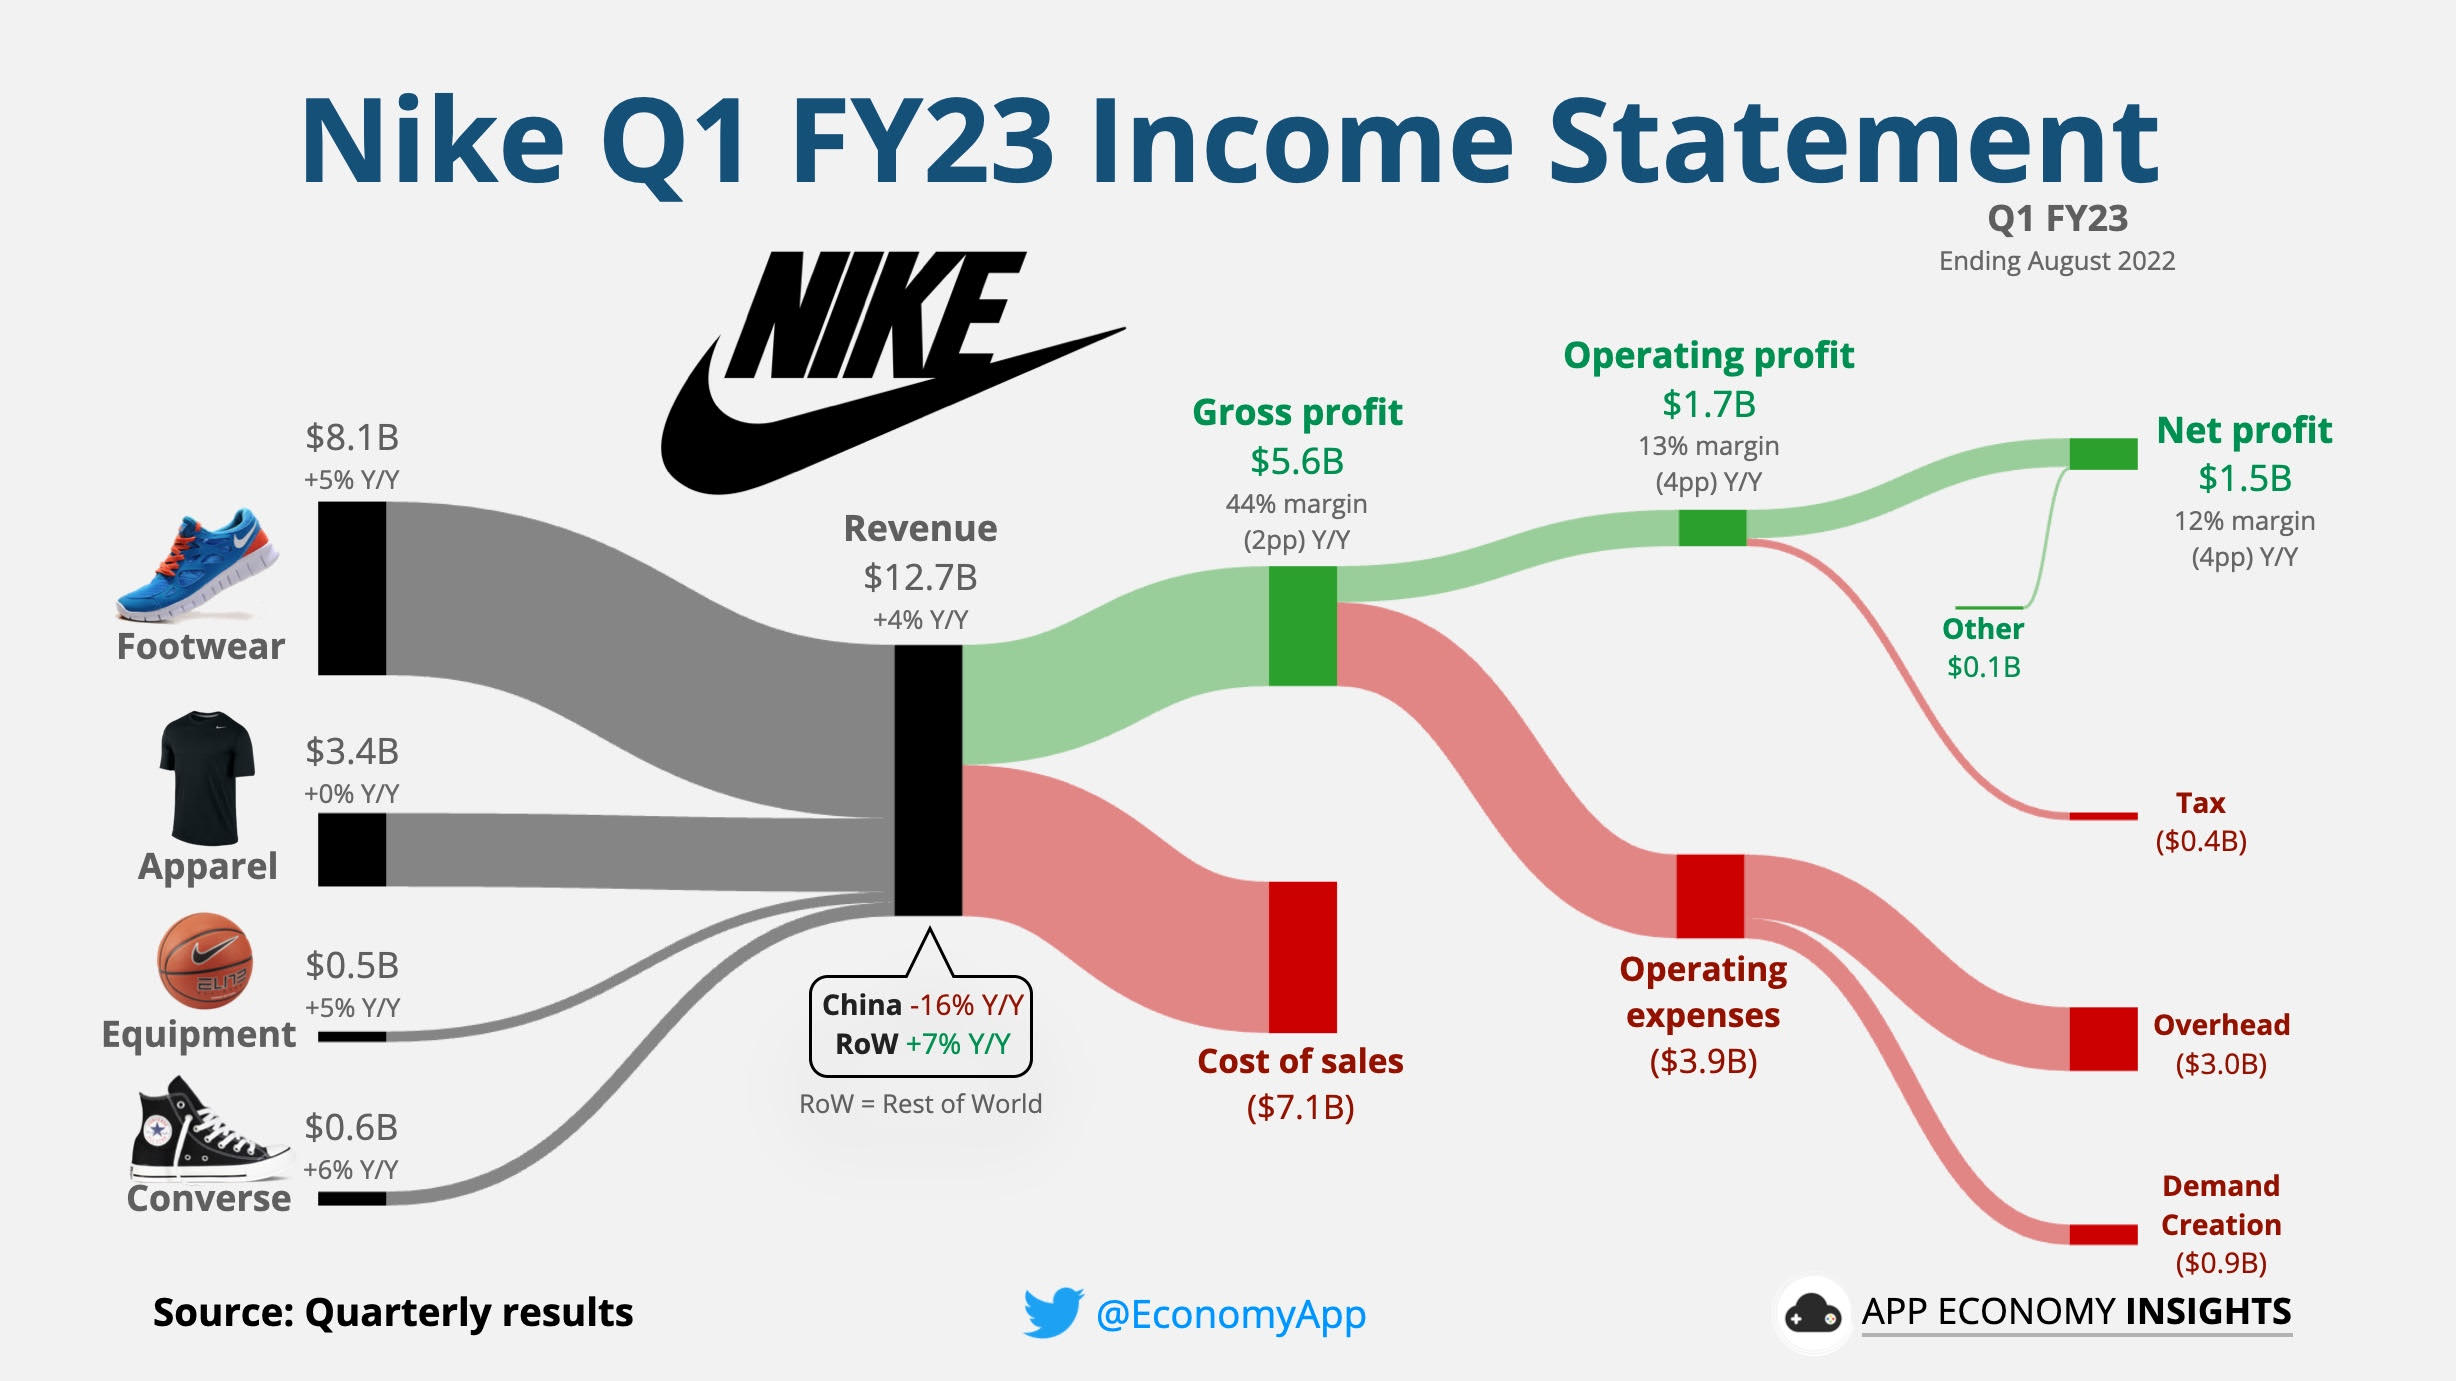 Variedad ballena Asociación App Economy Insights on Twitter: "$NKE Nike's Income Statement Q1 FY23.  https://t.co/lZcKDDyKAC" / Twitter